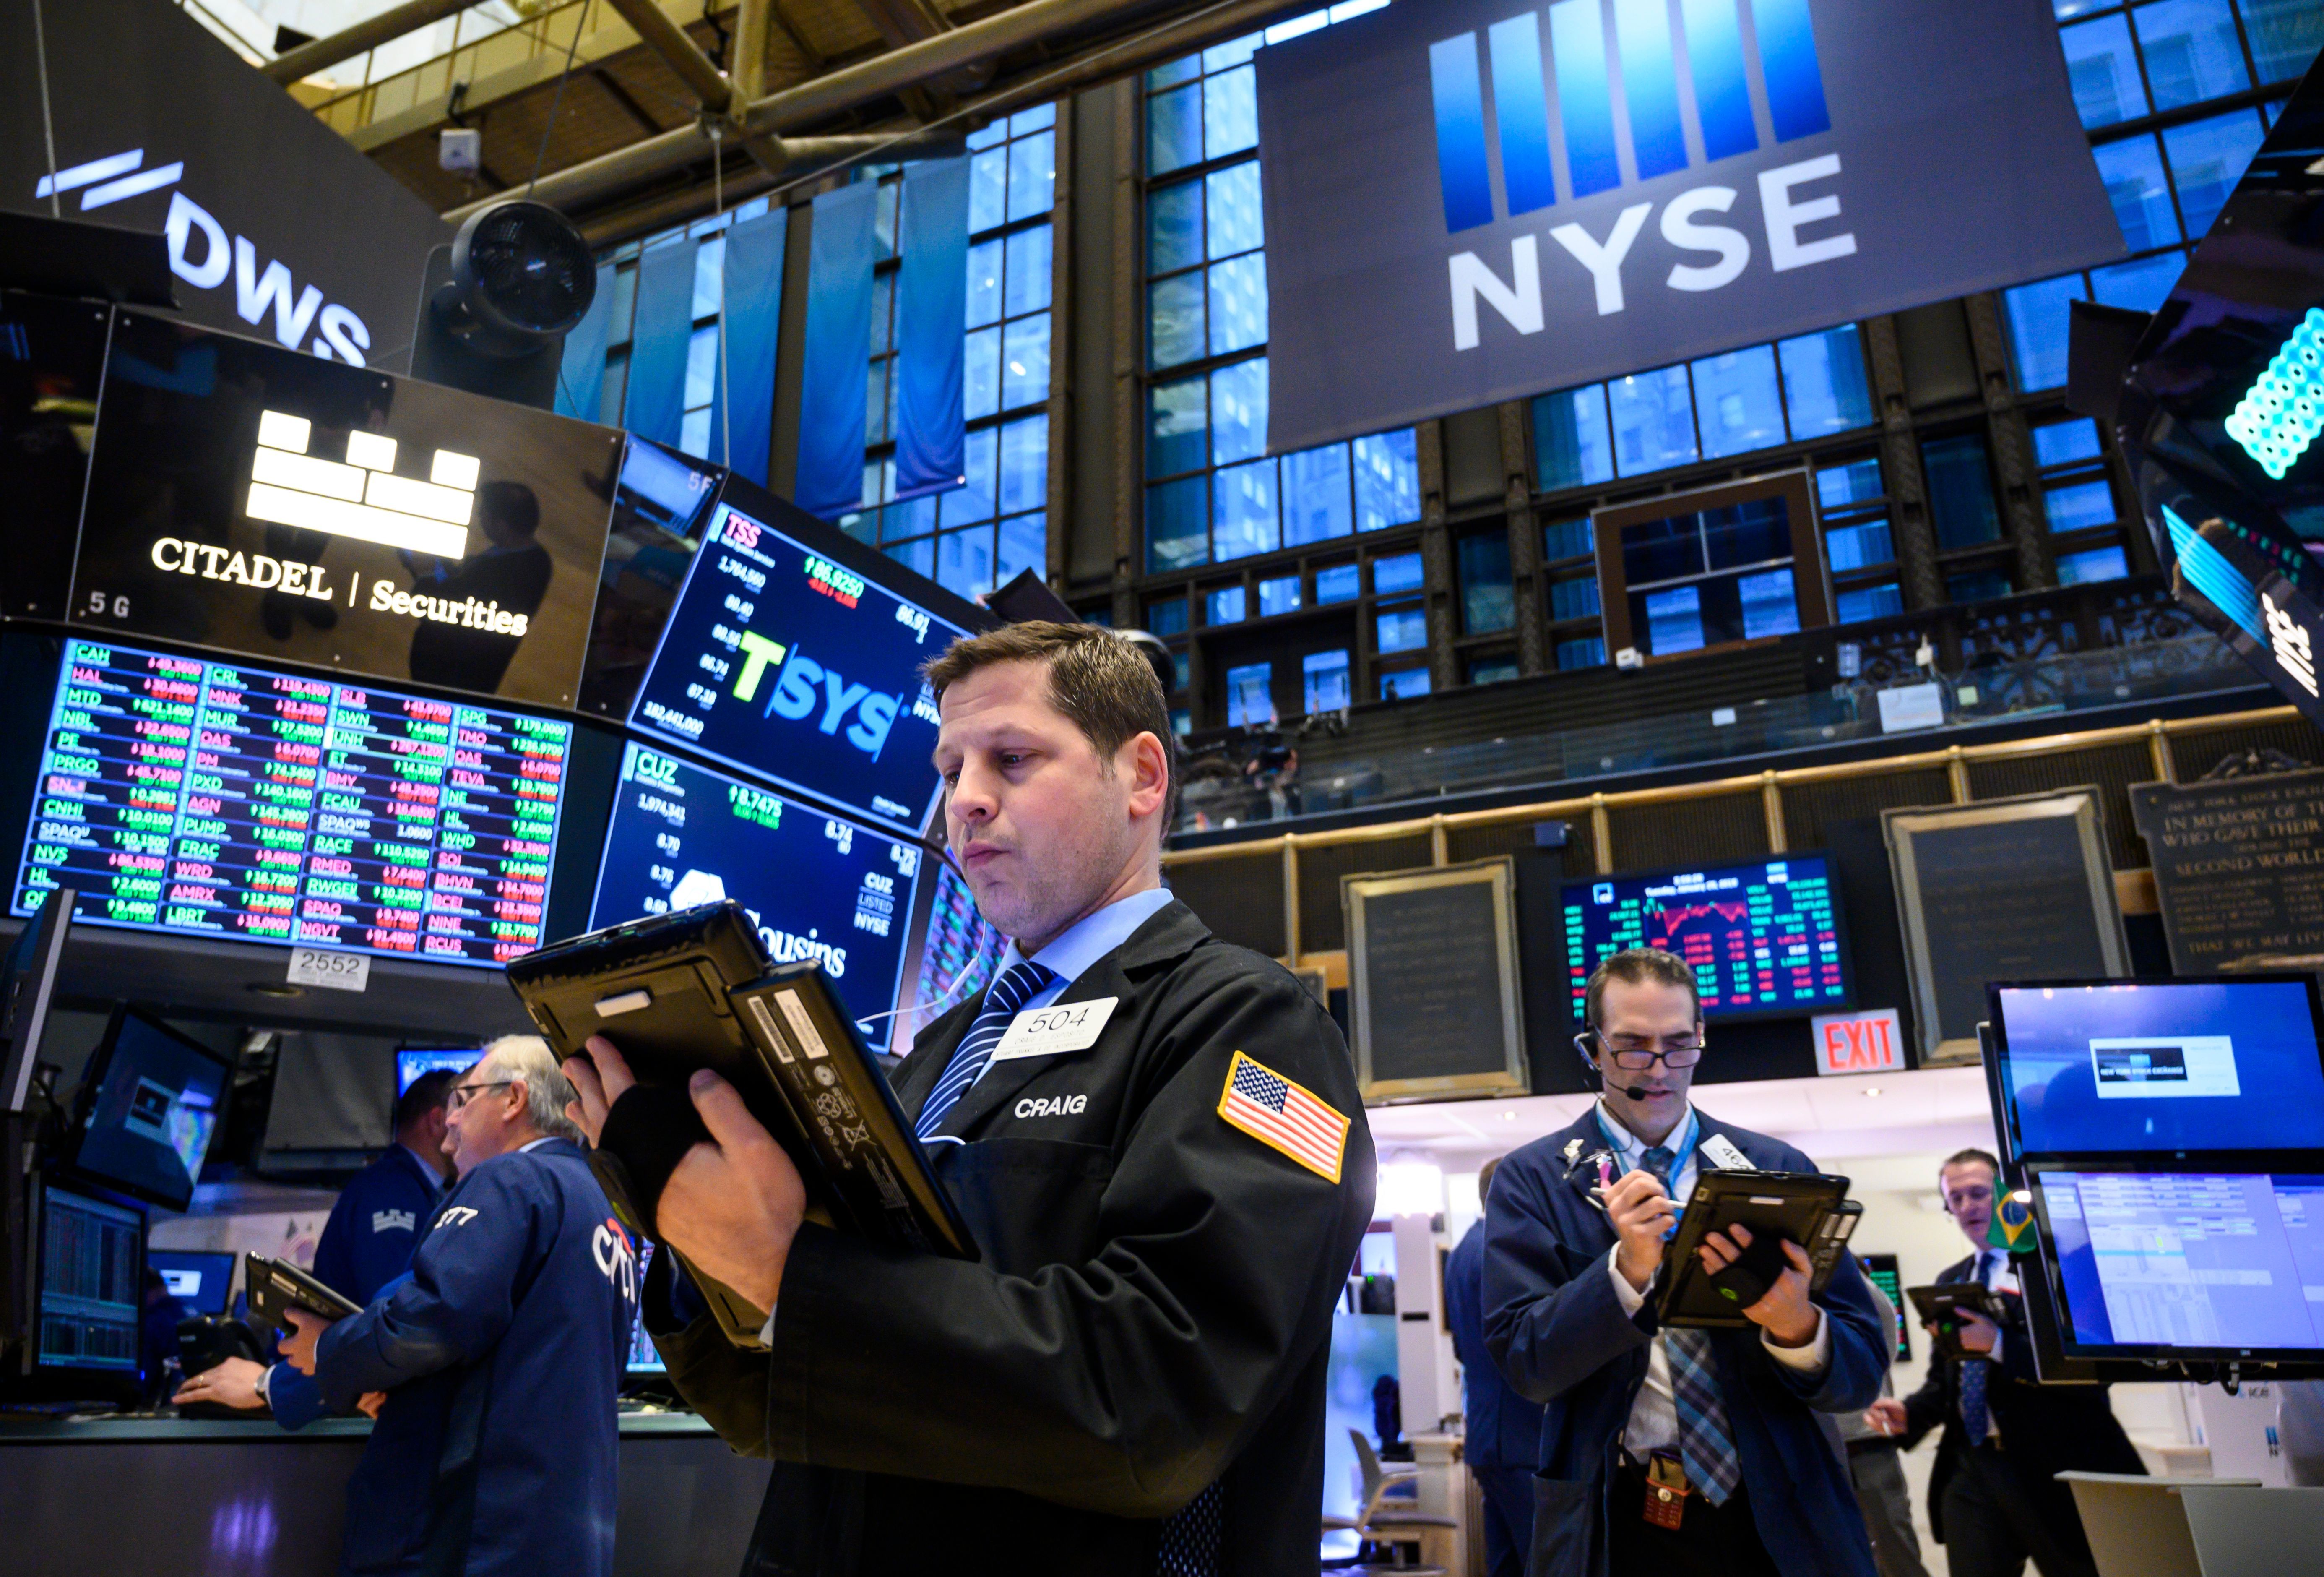 Wall Street monitors trade and growth concerns